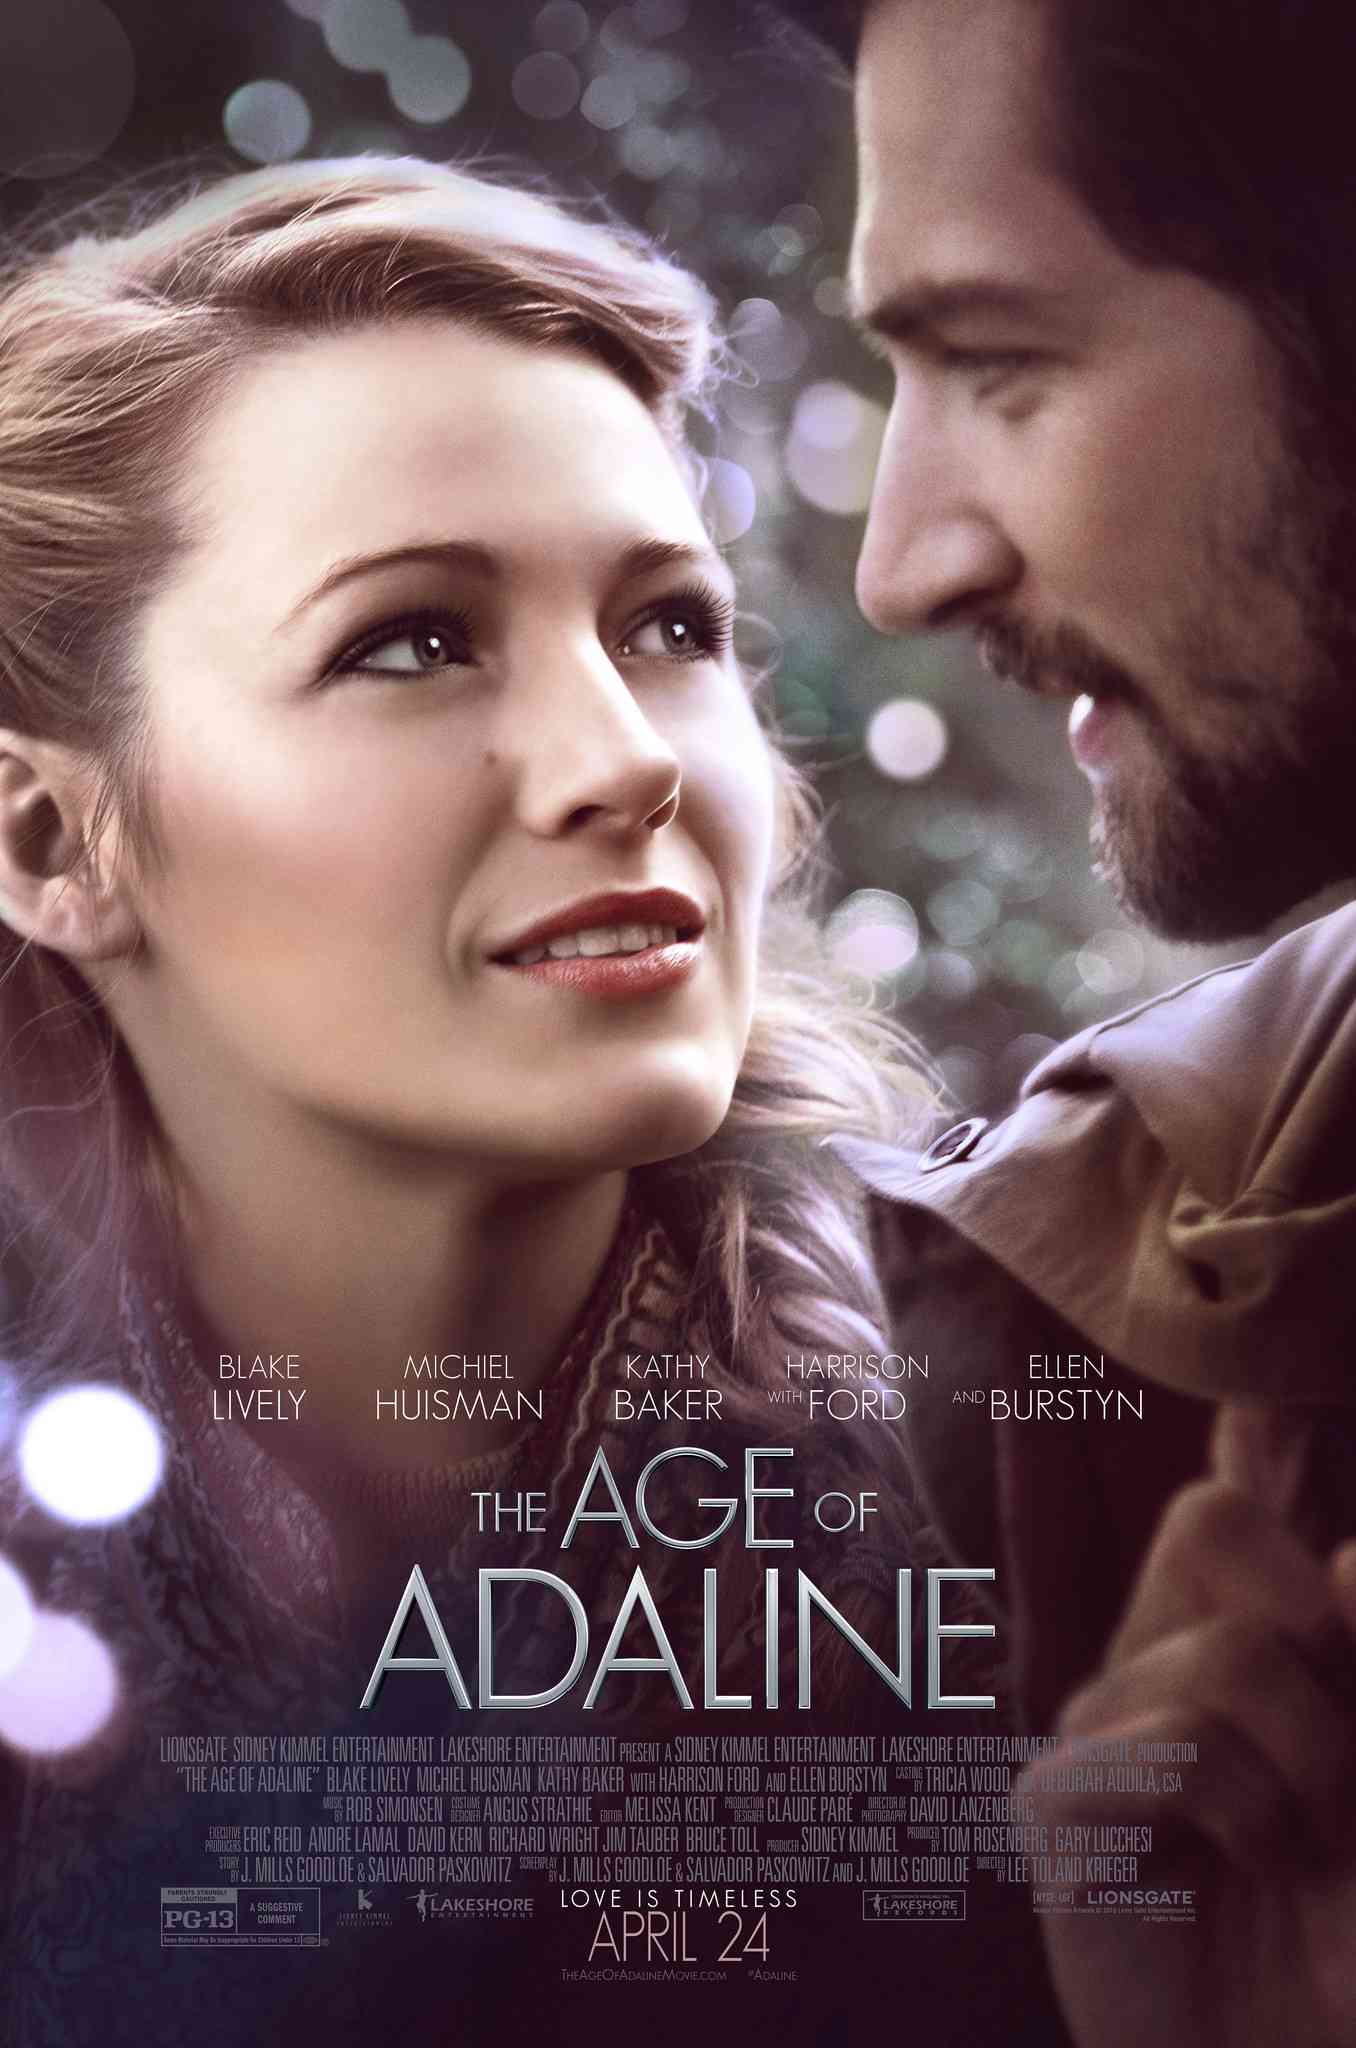 FULL MOVIE: The Age of Adaline (2015)